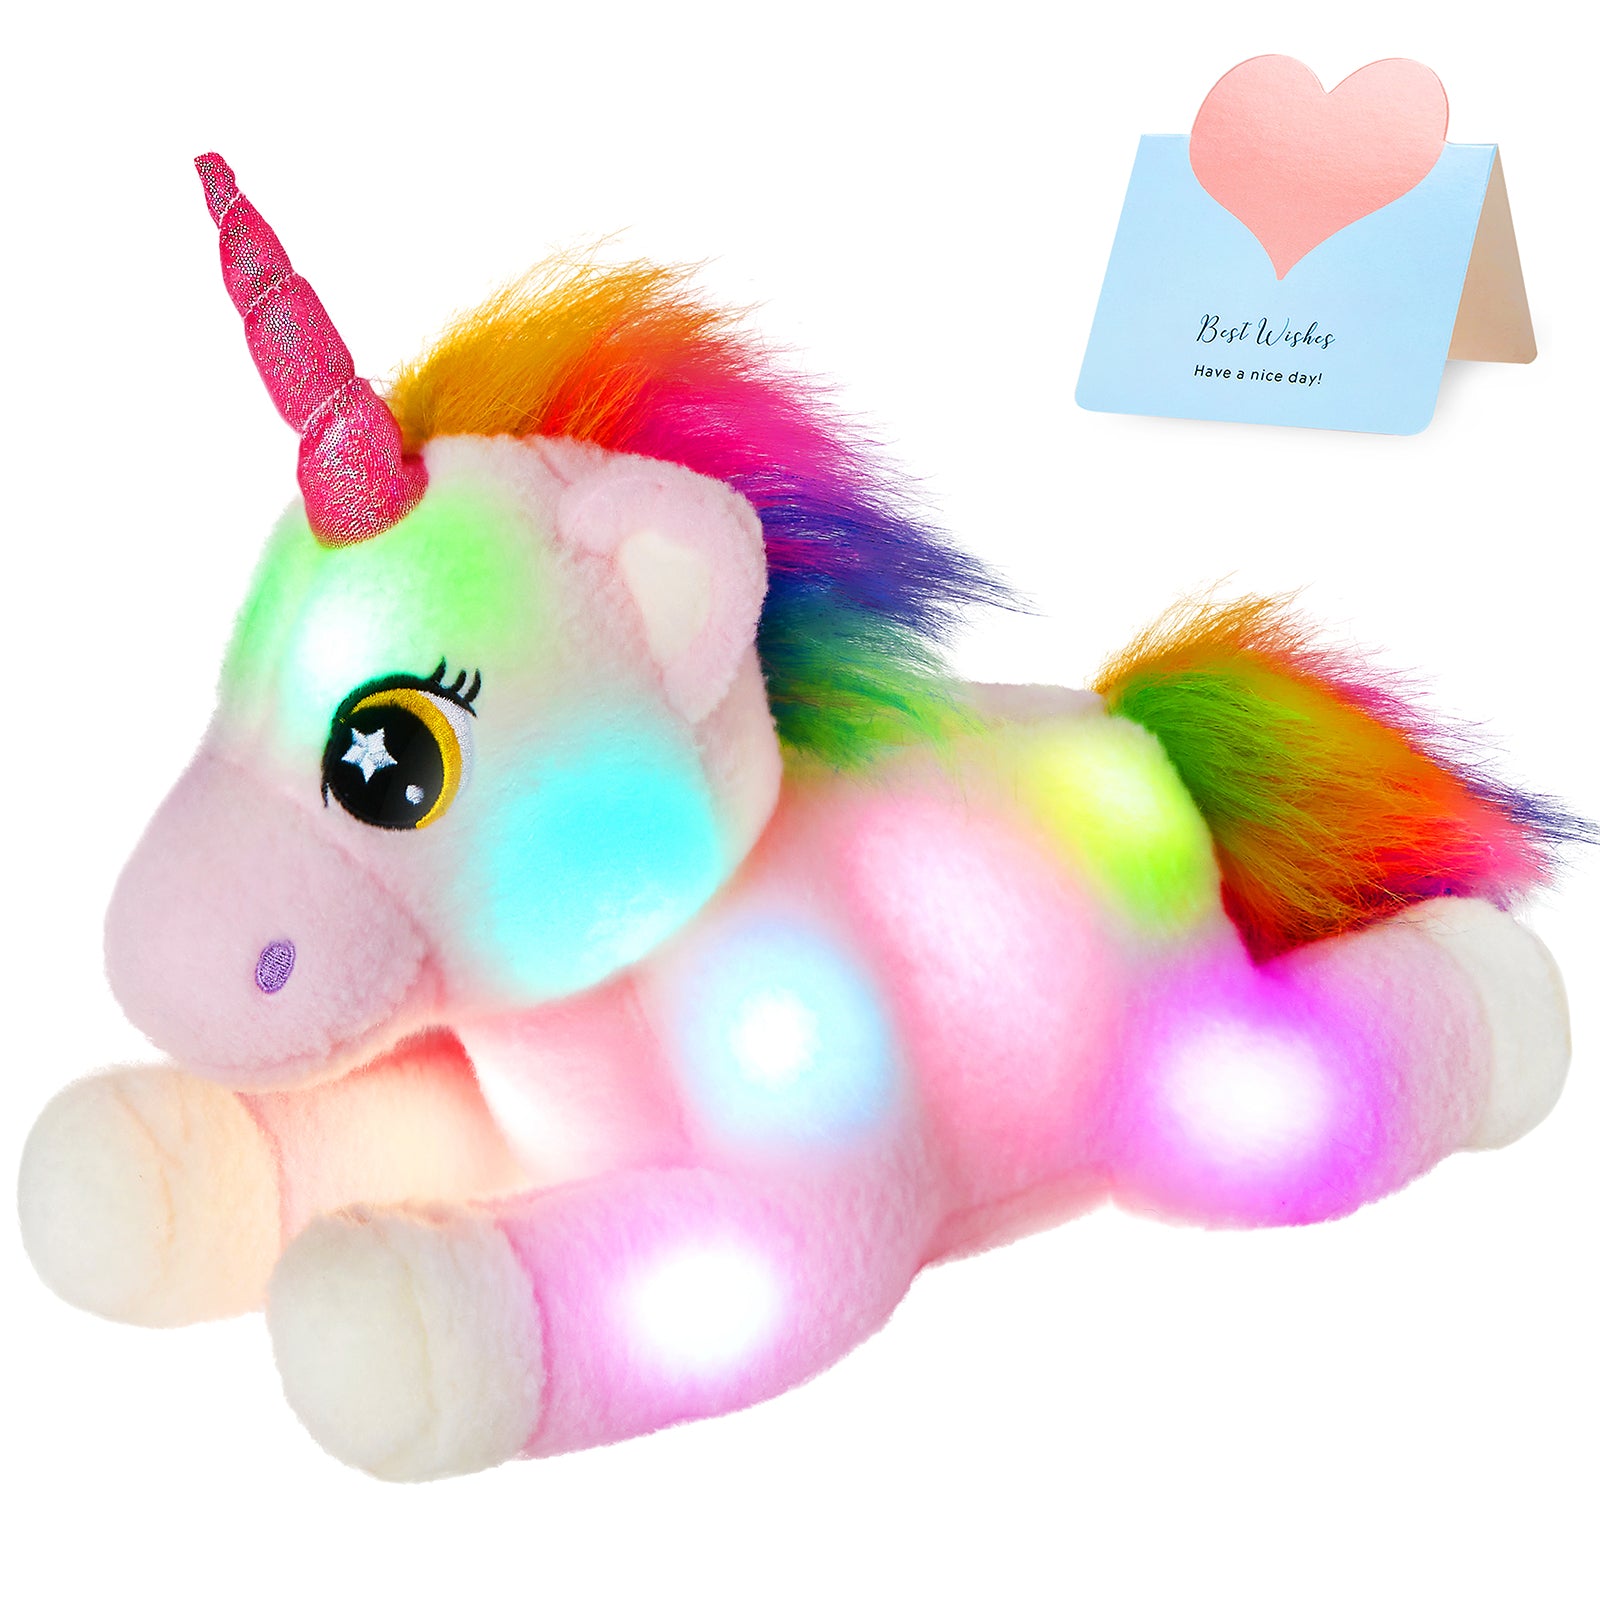 Bstaofy Light up Unicorn Stuffed Animals Glow Adorable Plush LED Toys